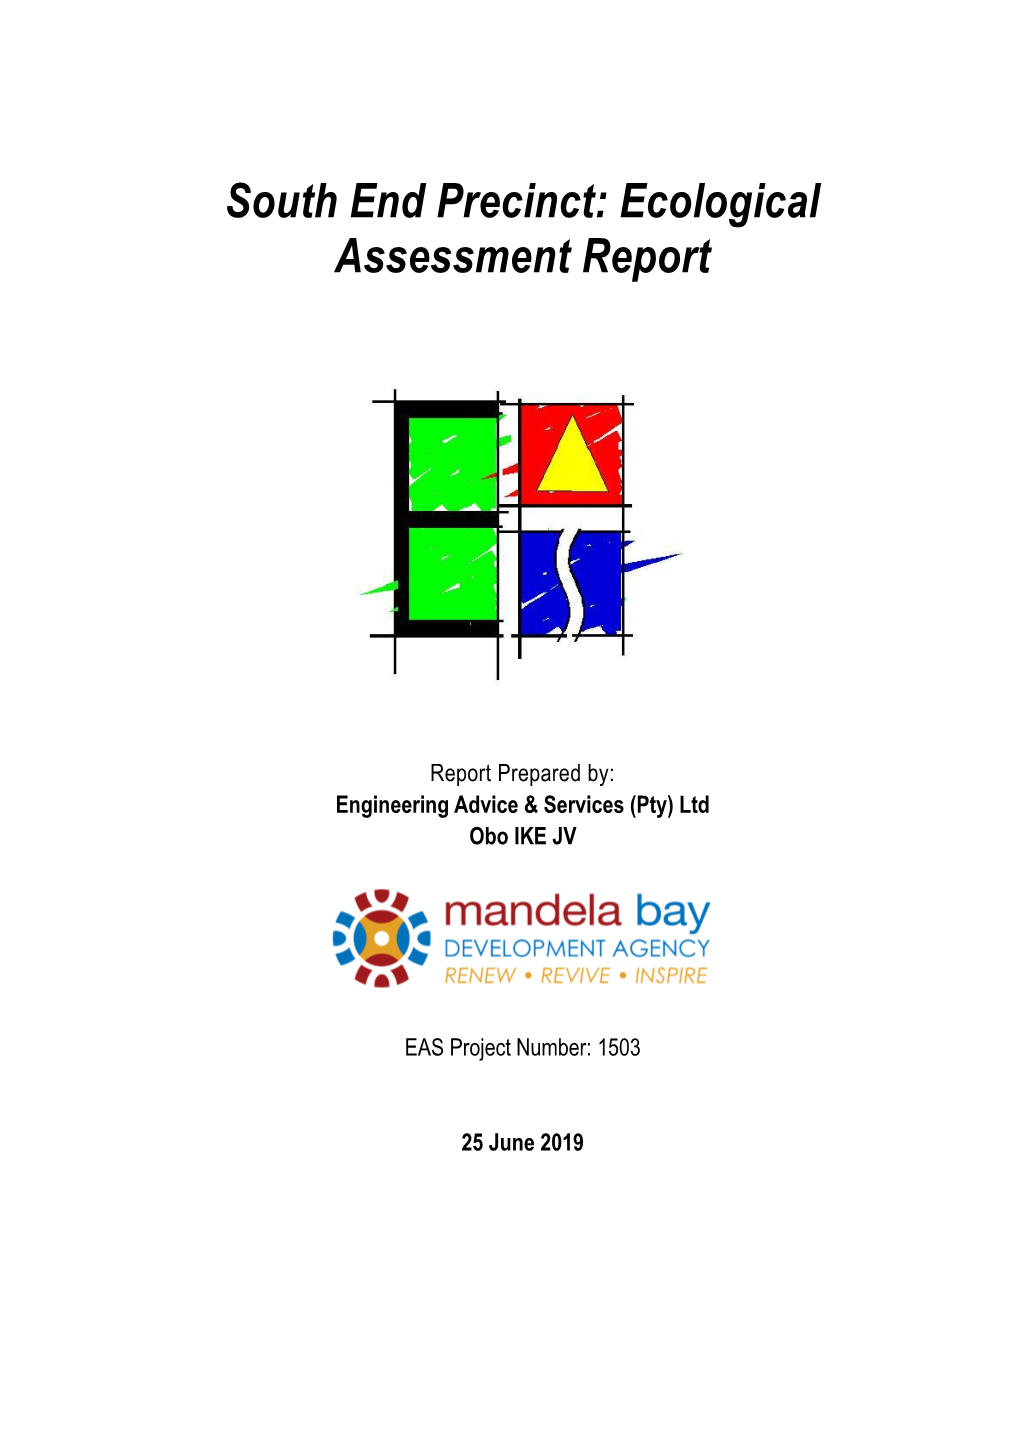 South End Precinct: Ecological Assessment Report